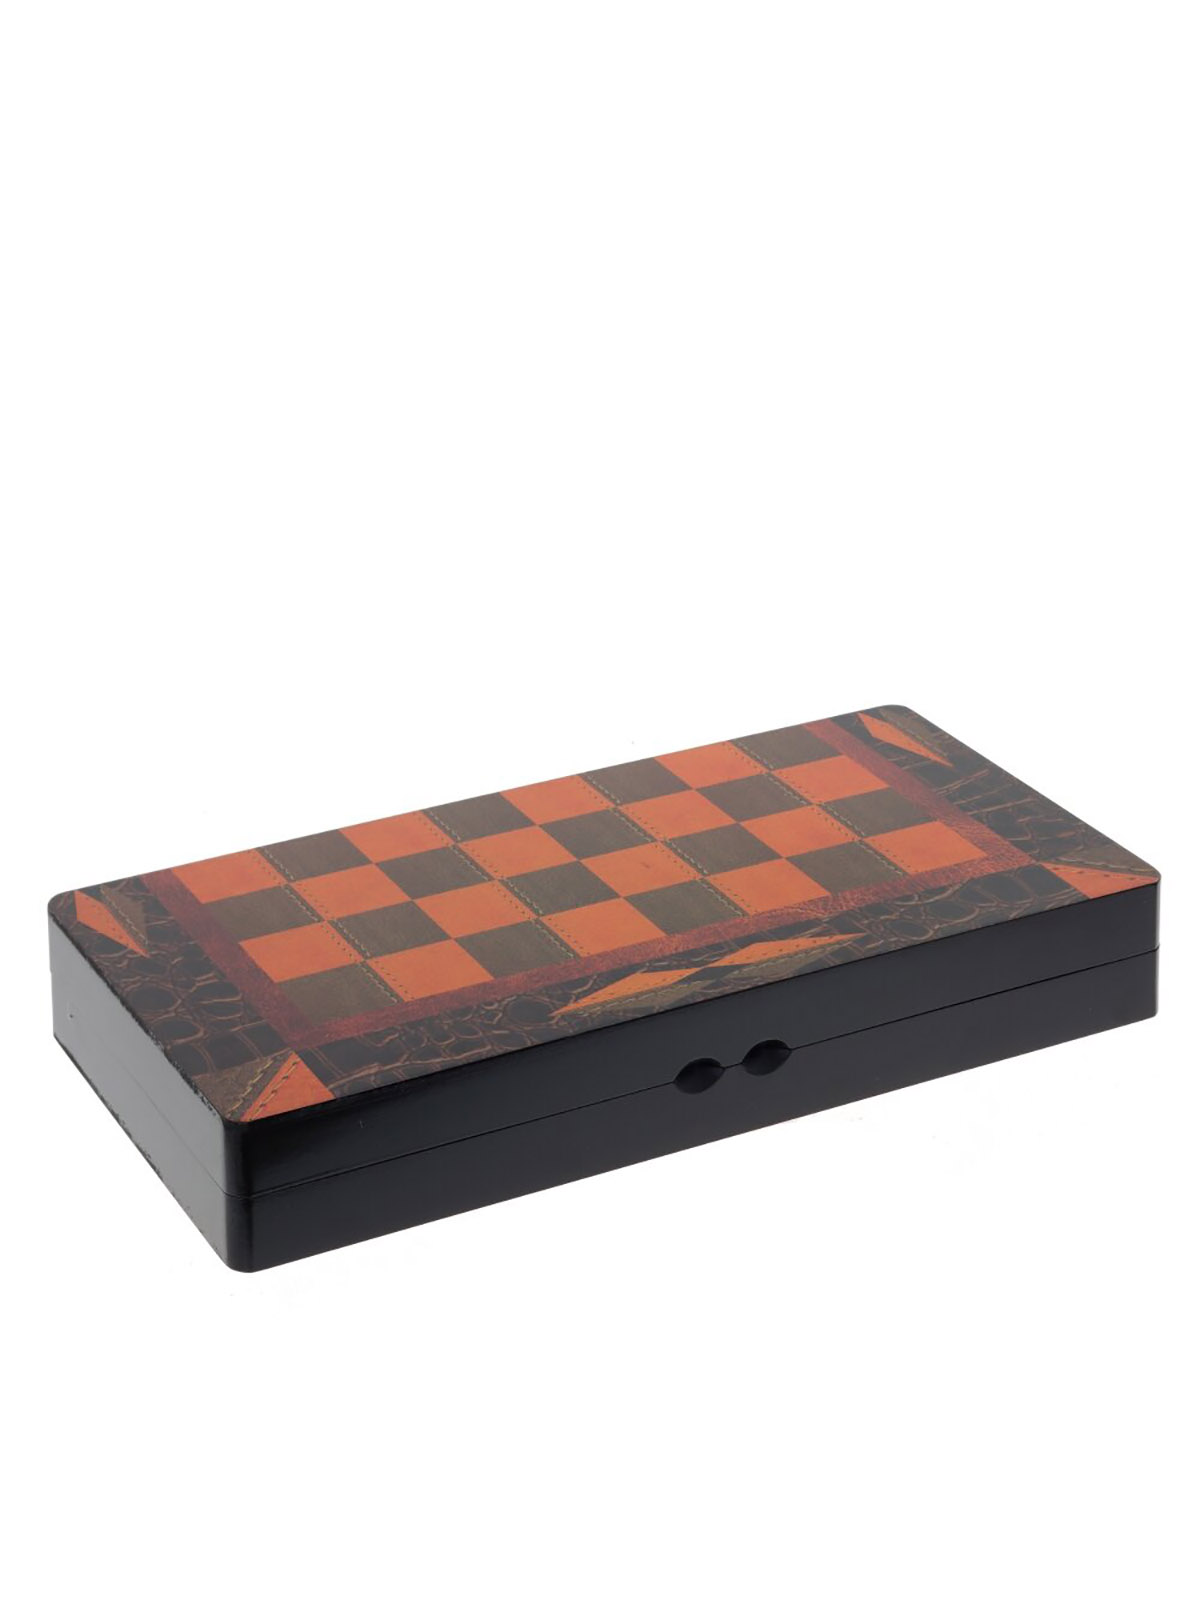 Шахматы шашки нарды 3 в 1 Remecoclub деревянные 758915 40x20x6 см